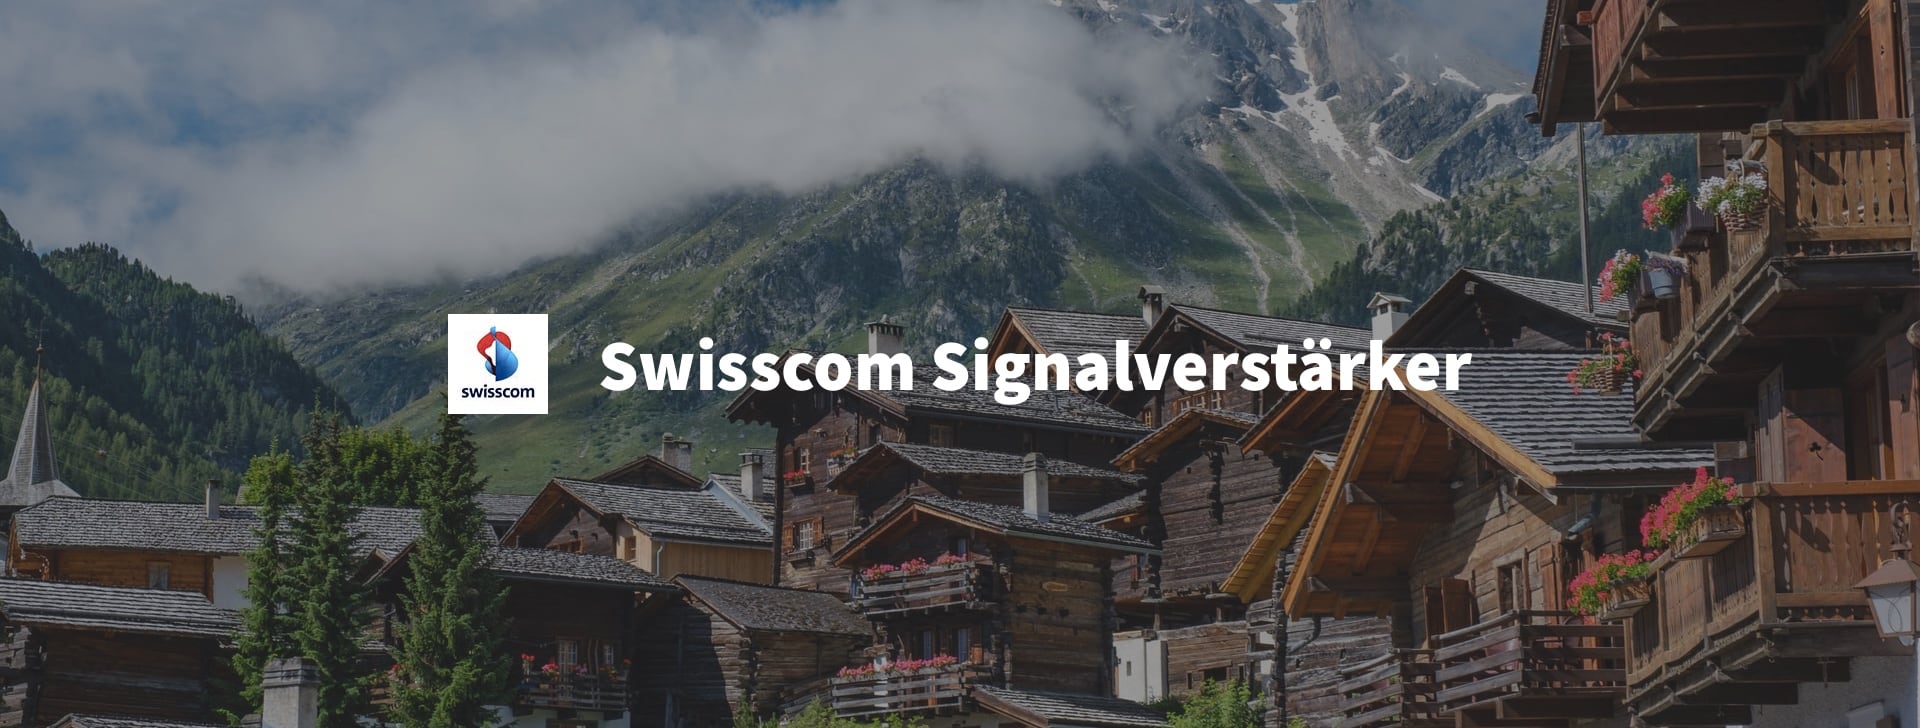 Swisscom Signalverstärker